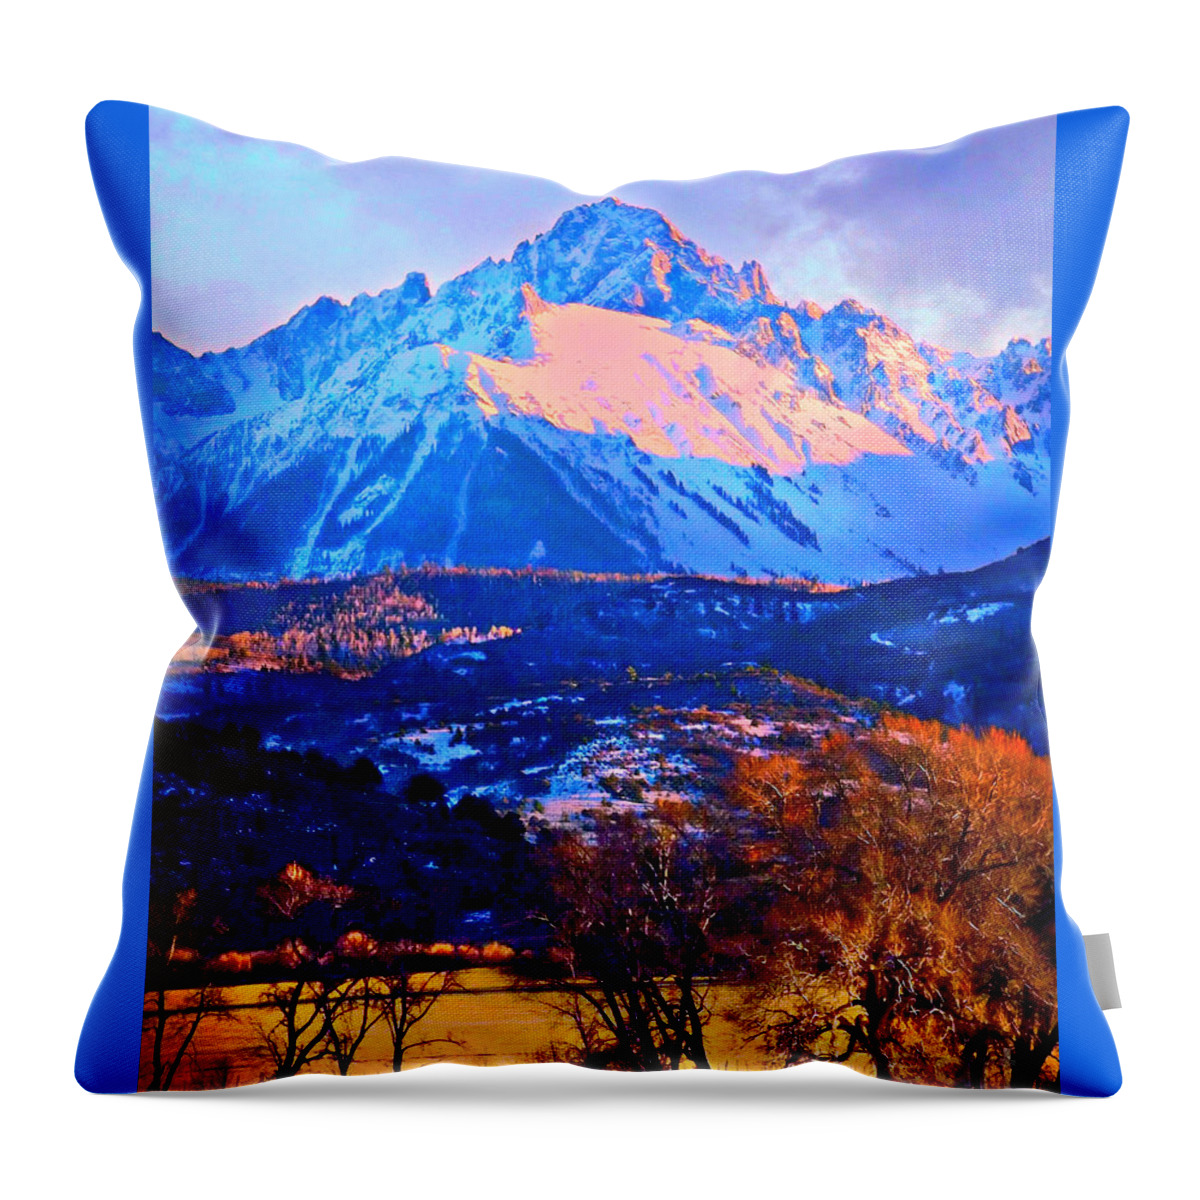 Mount Sneffels Throw Pillow featuring the digital art Mount Sneffels by Annie Gibbons